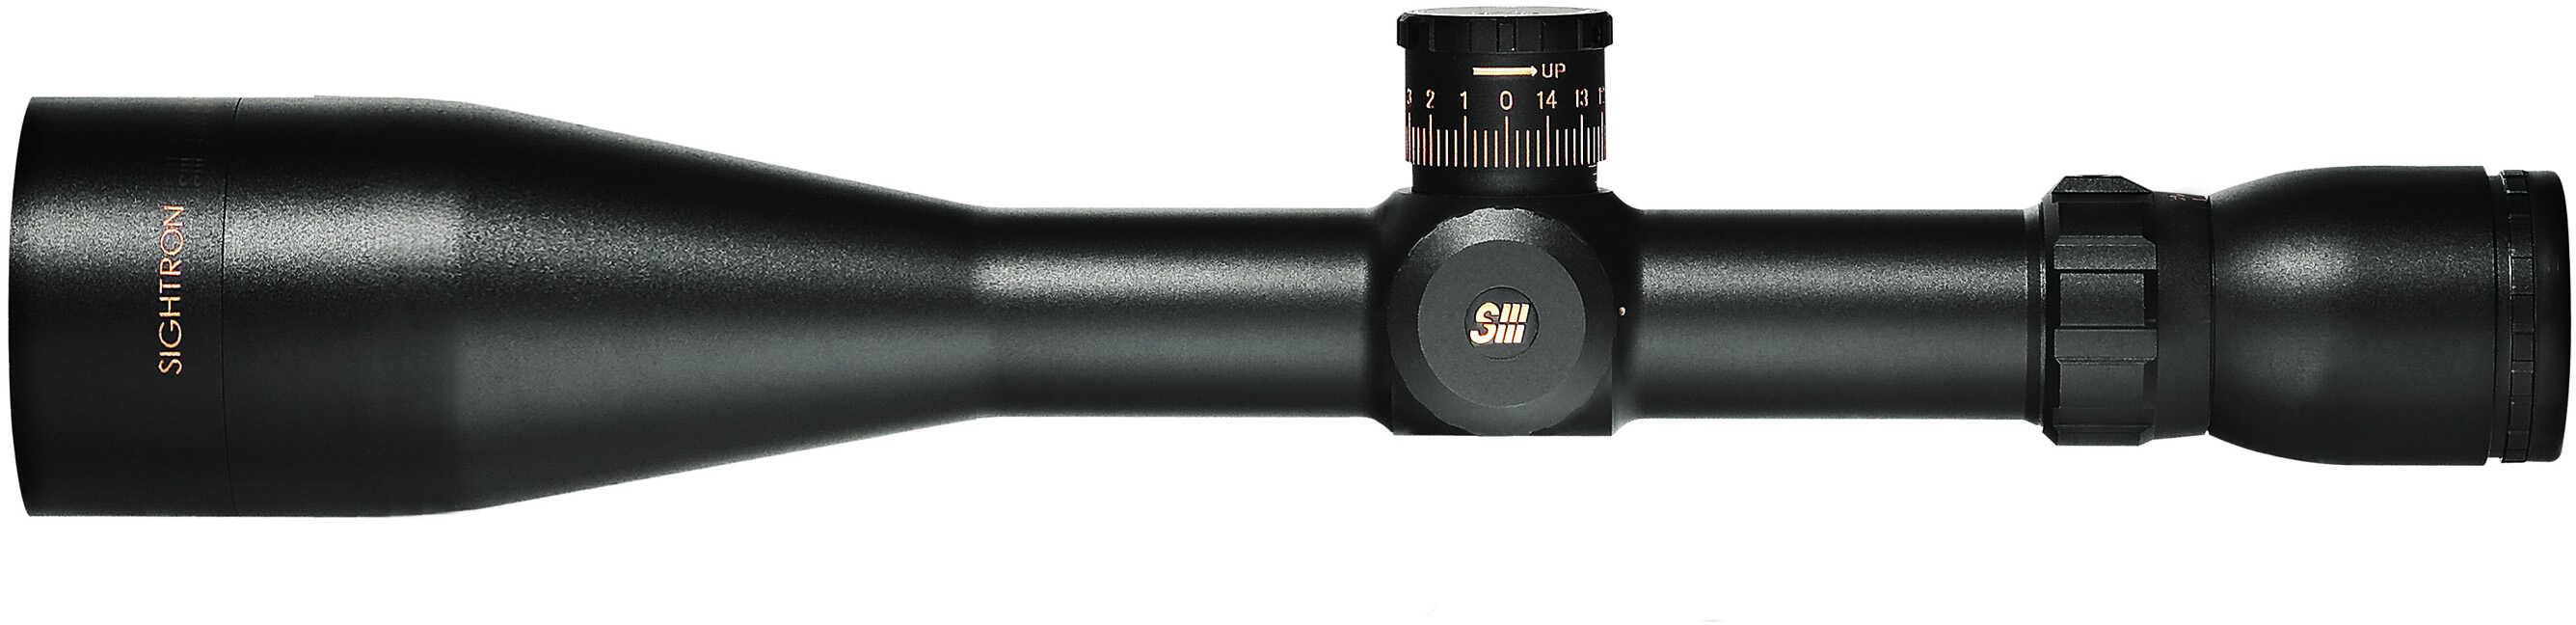 Sightron SIII 8-32x56mm Long Range MOA-2 Reticle Matte Black Scope 25149